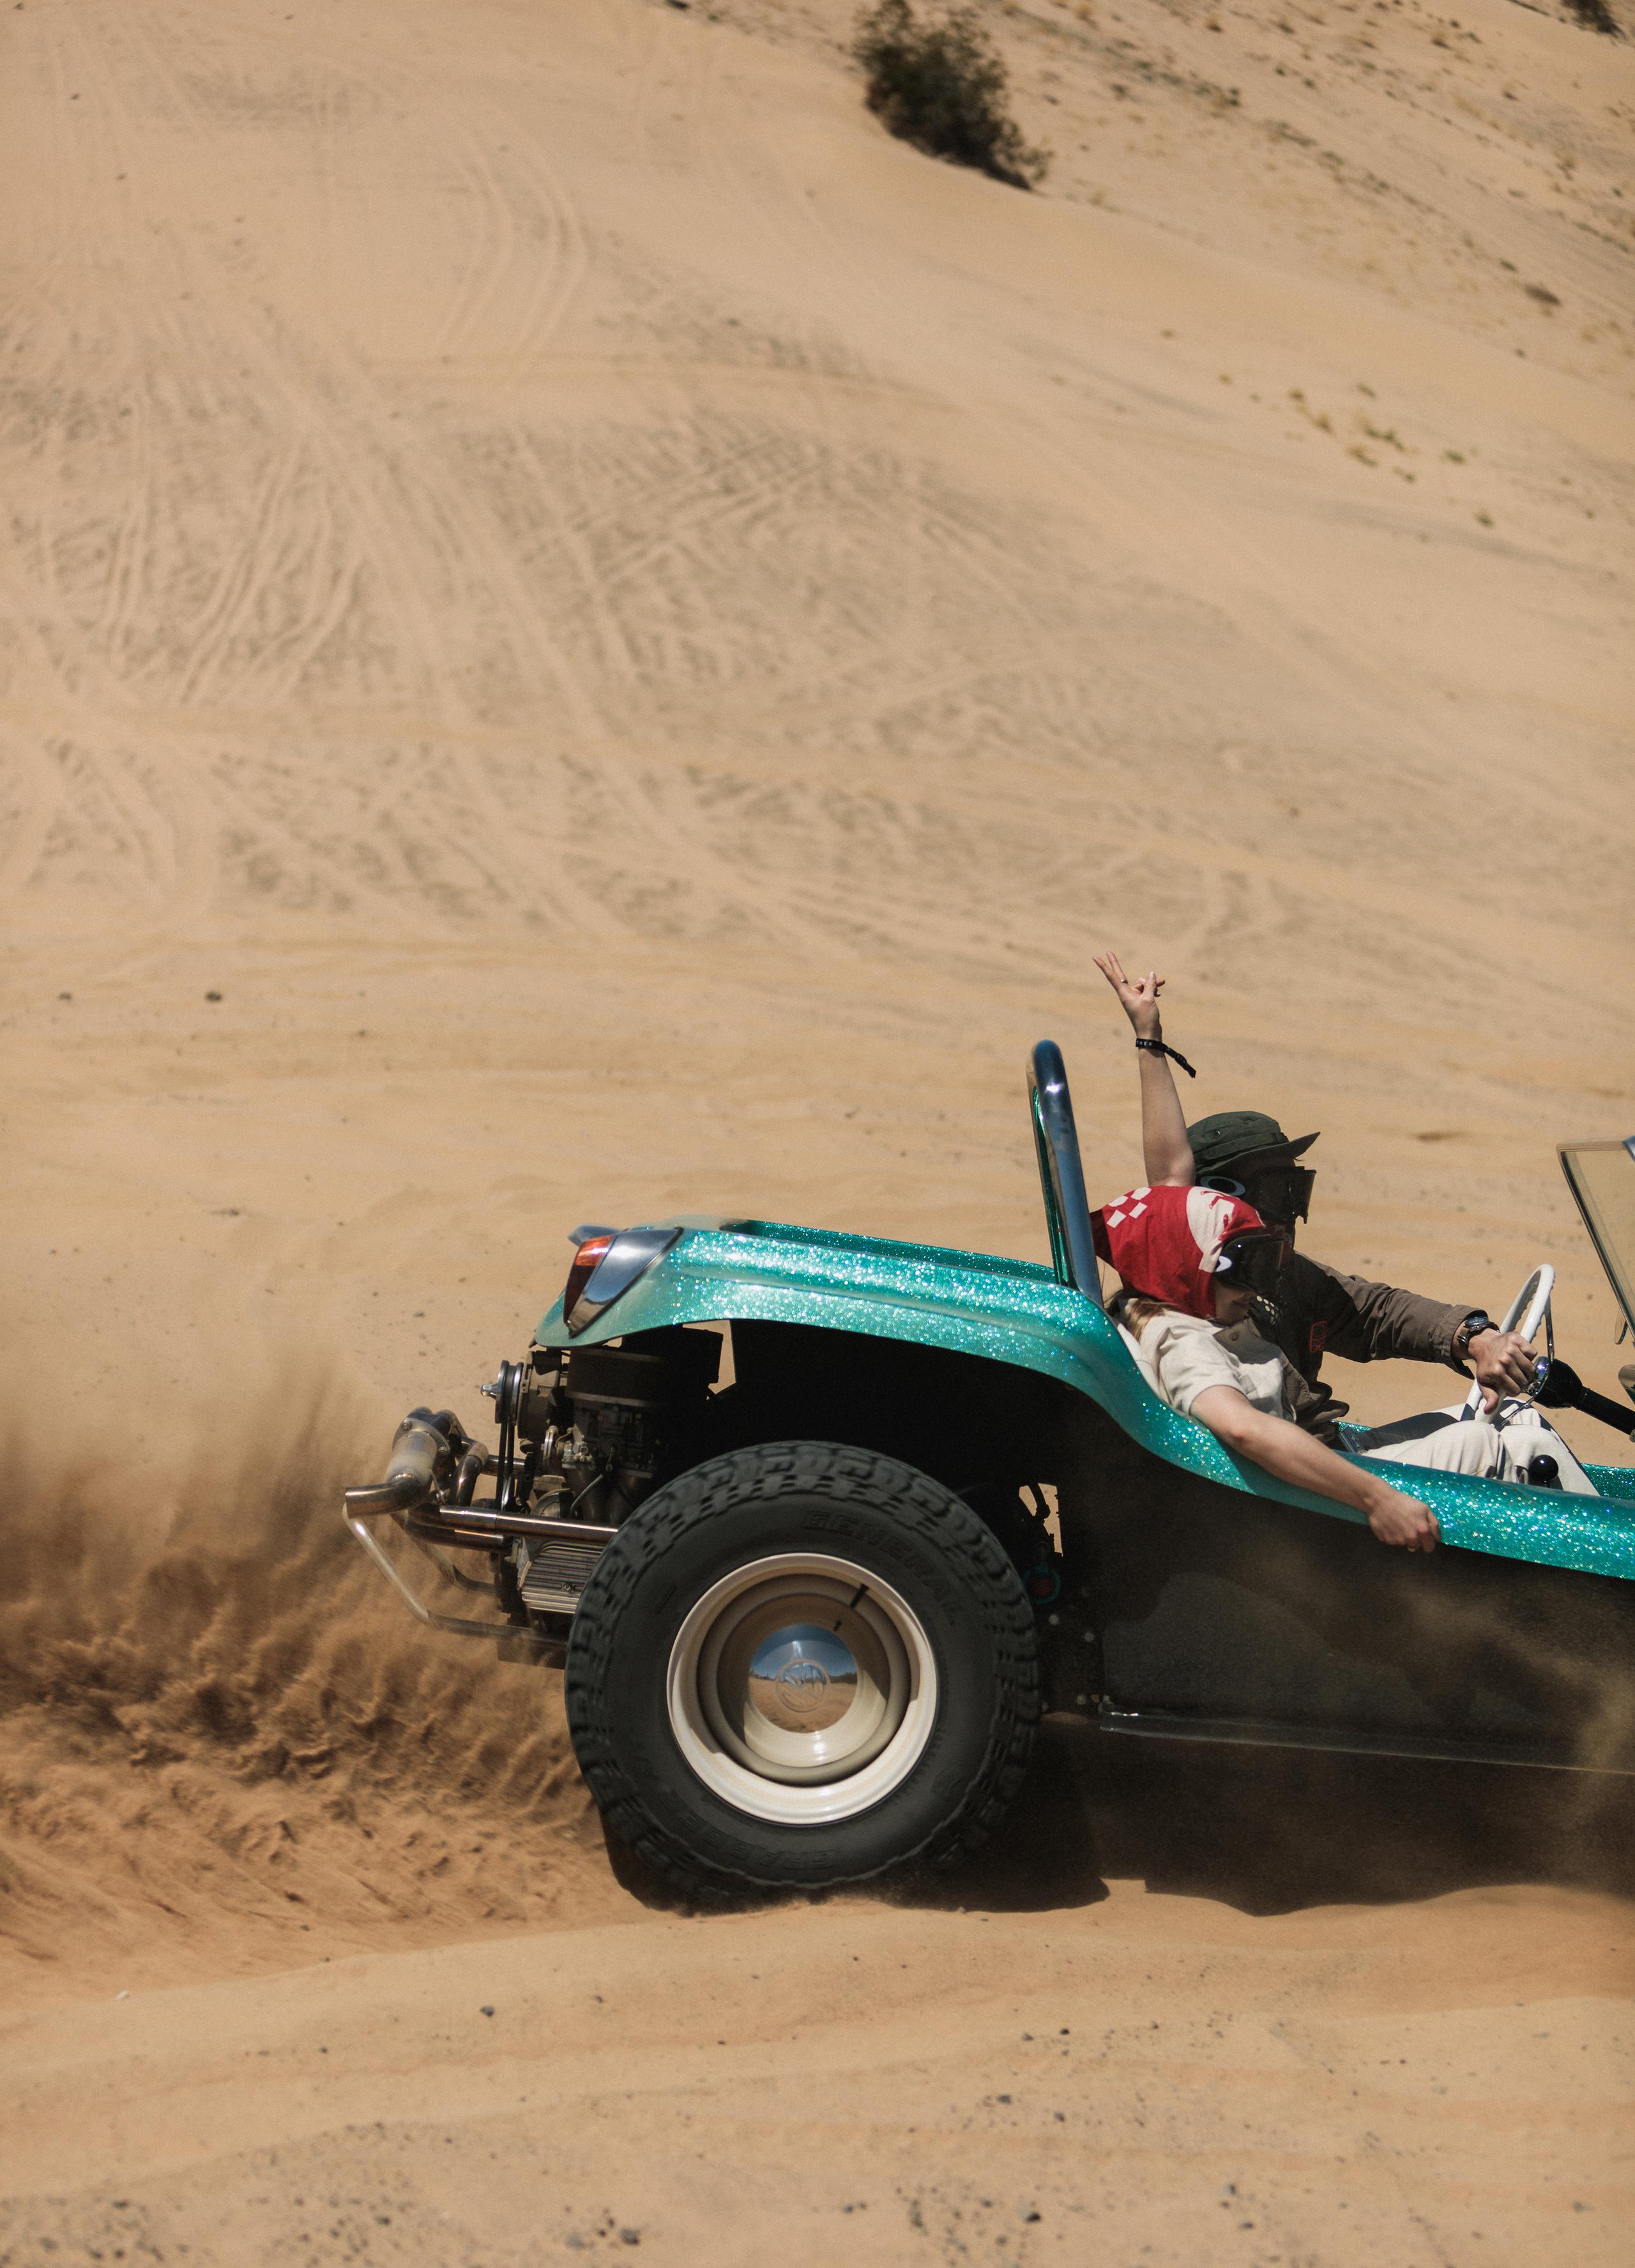 Man and woman in custom vehicle driving in Joshua Tree desert